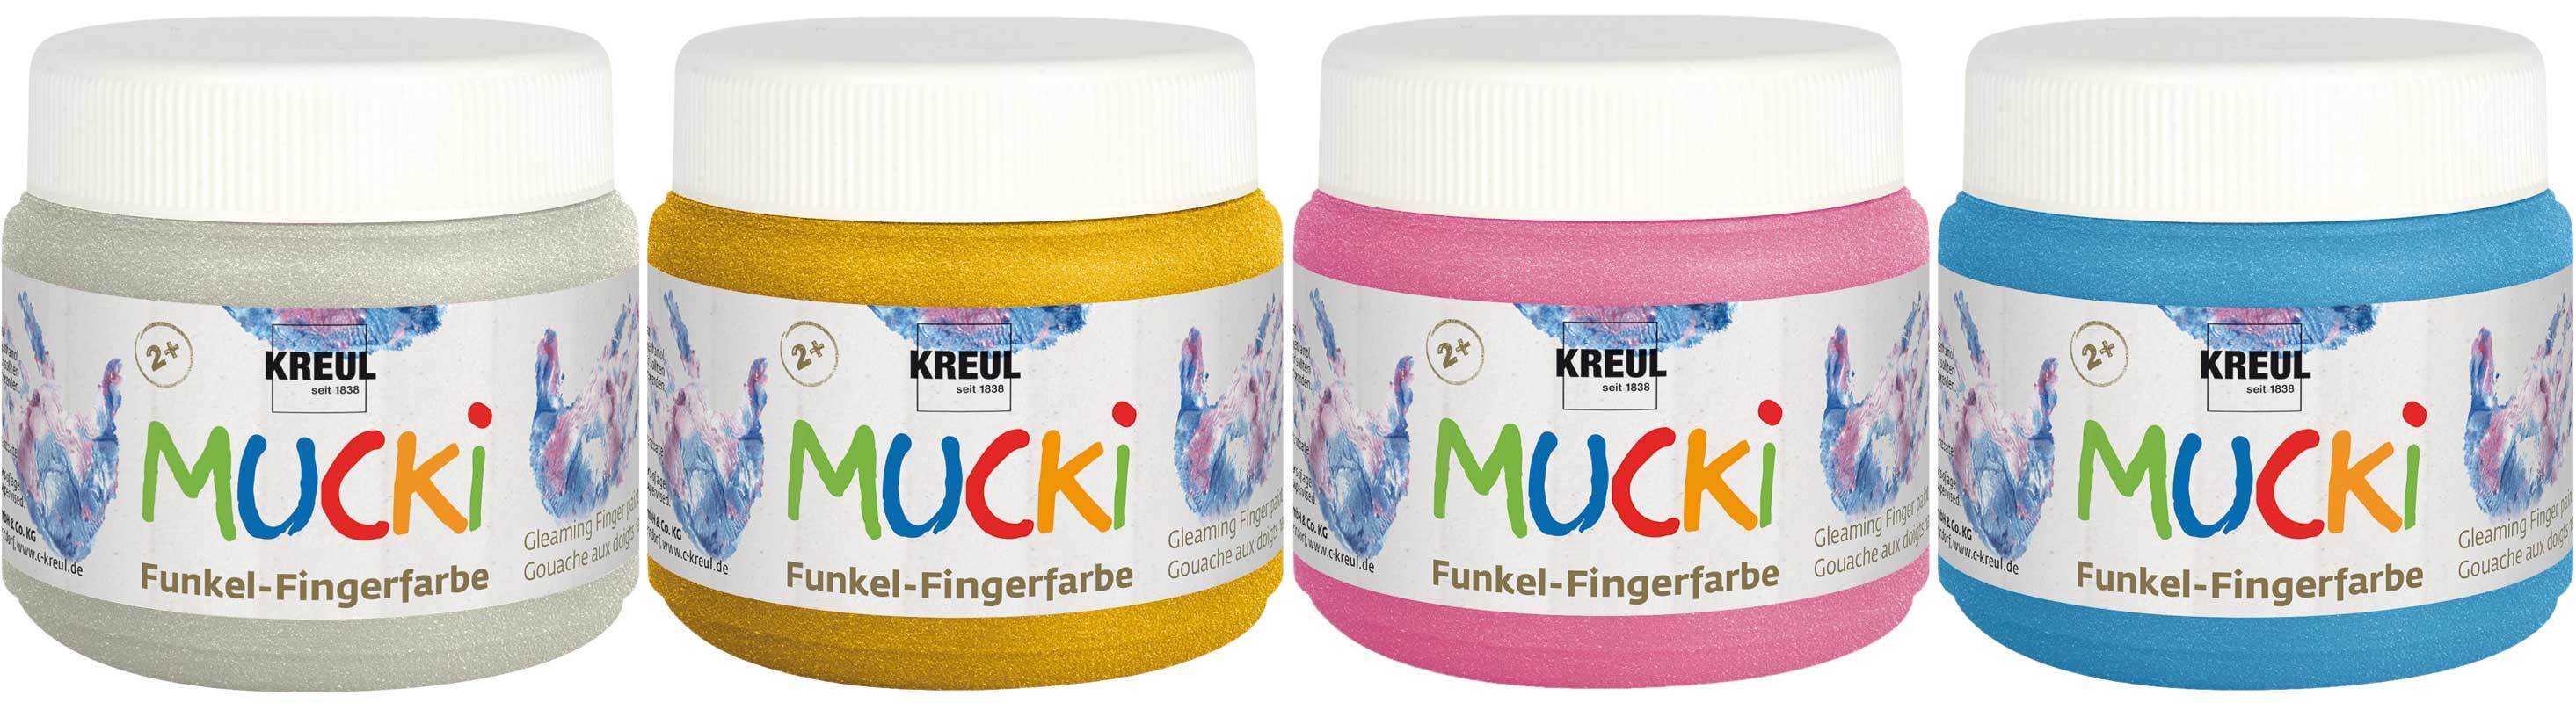 MUCKI Funkelfingerfarben Set - 4 x 150 ml